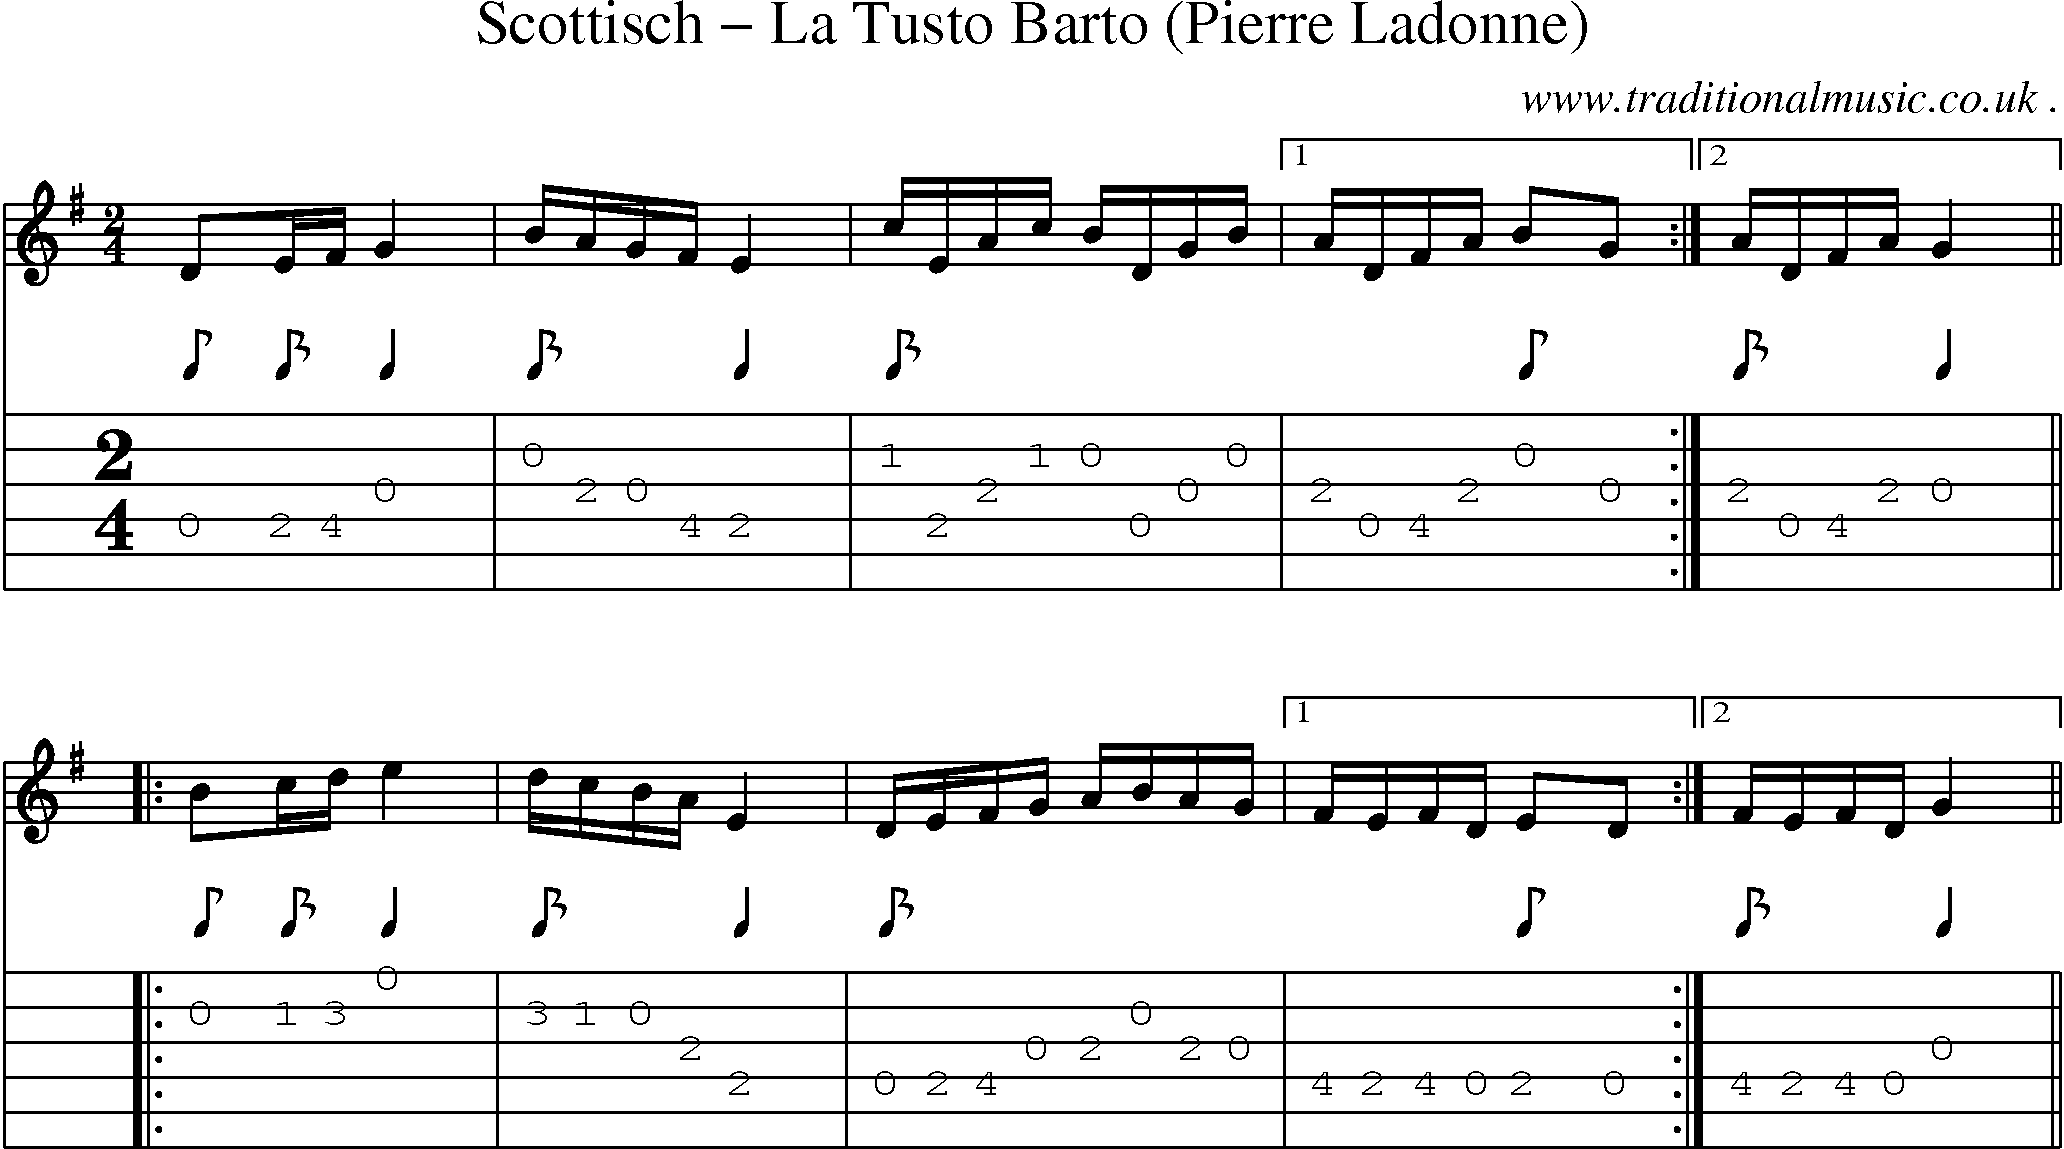 Sheet-Music and Guitar Tabs for Scottisch La Tusto Barto (pierre Ladonne)